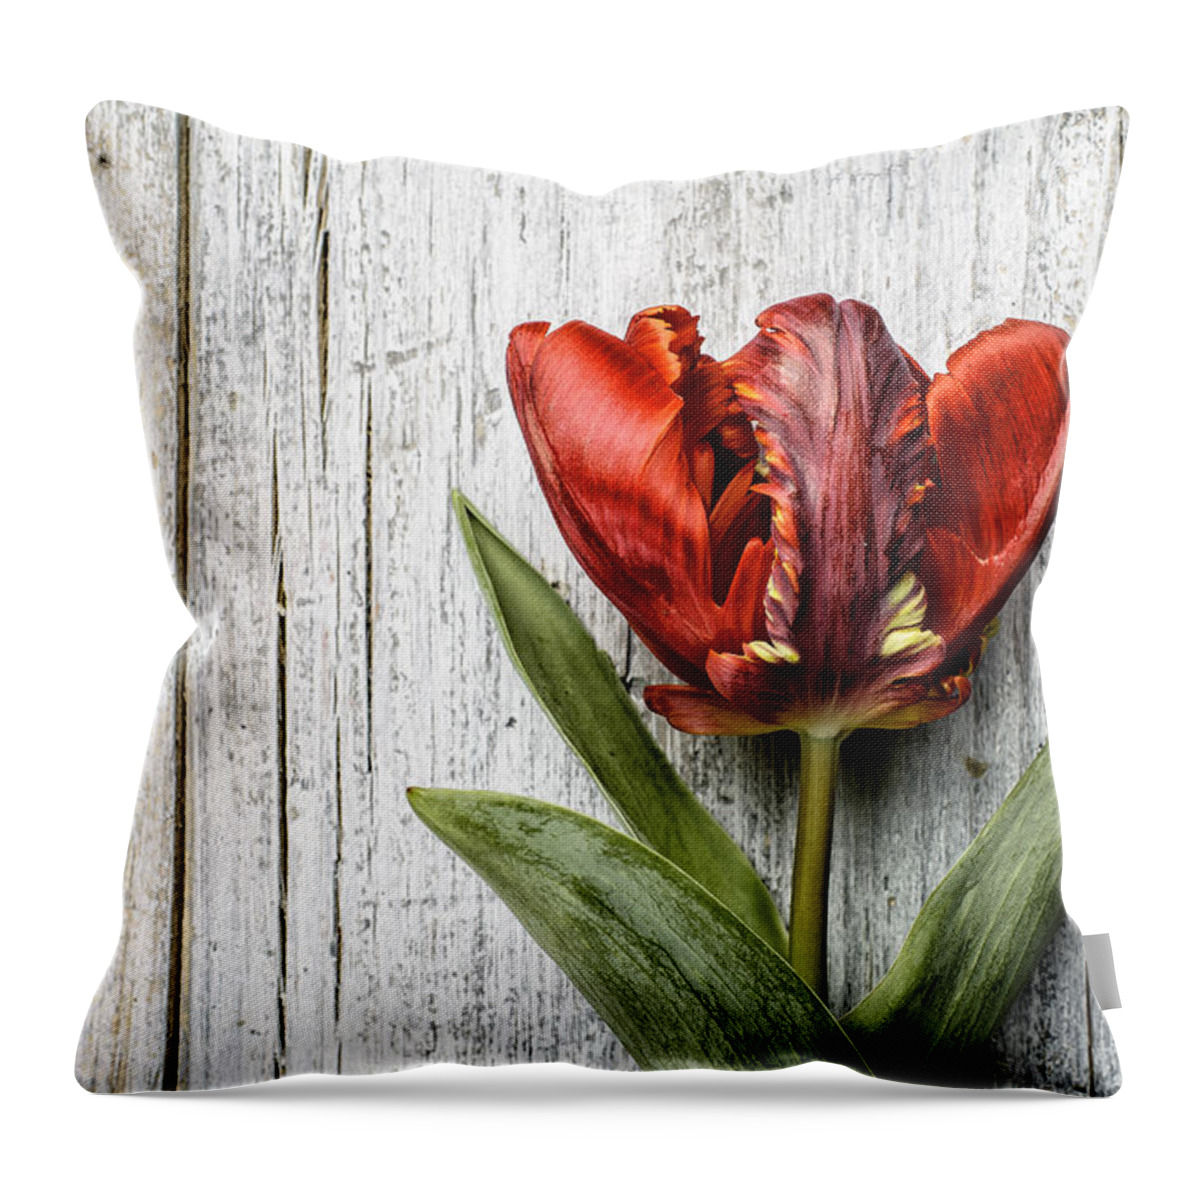 Tulip Throw Pillow featuring the photograph Tulip #3 by Nailia Schwarz